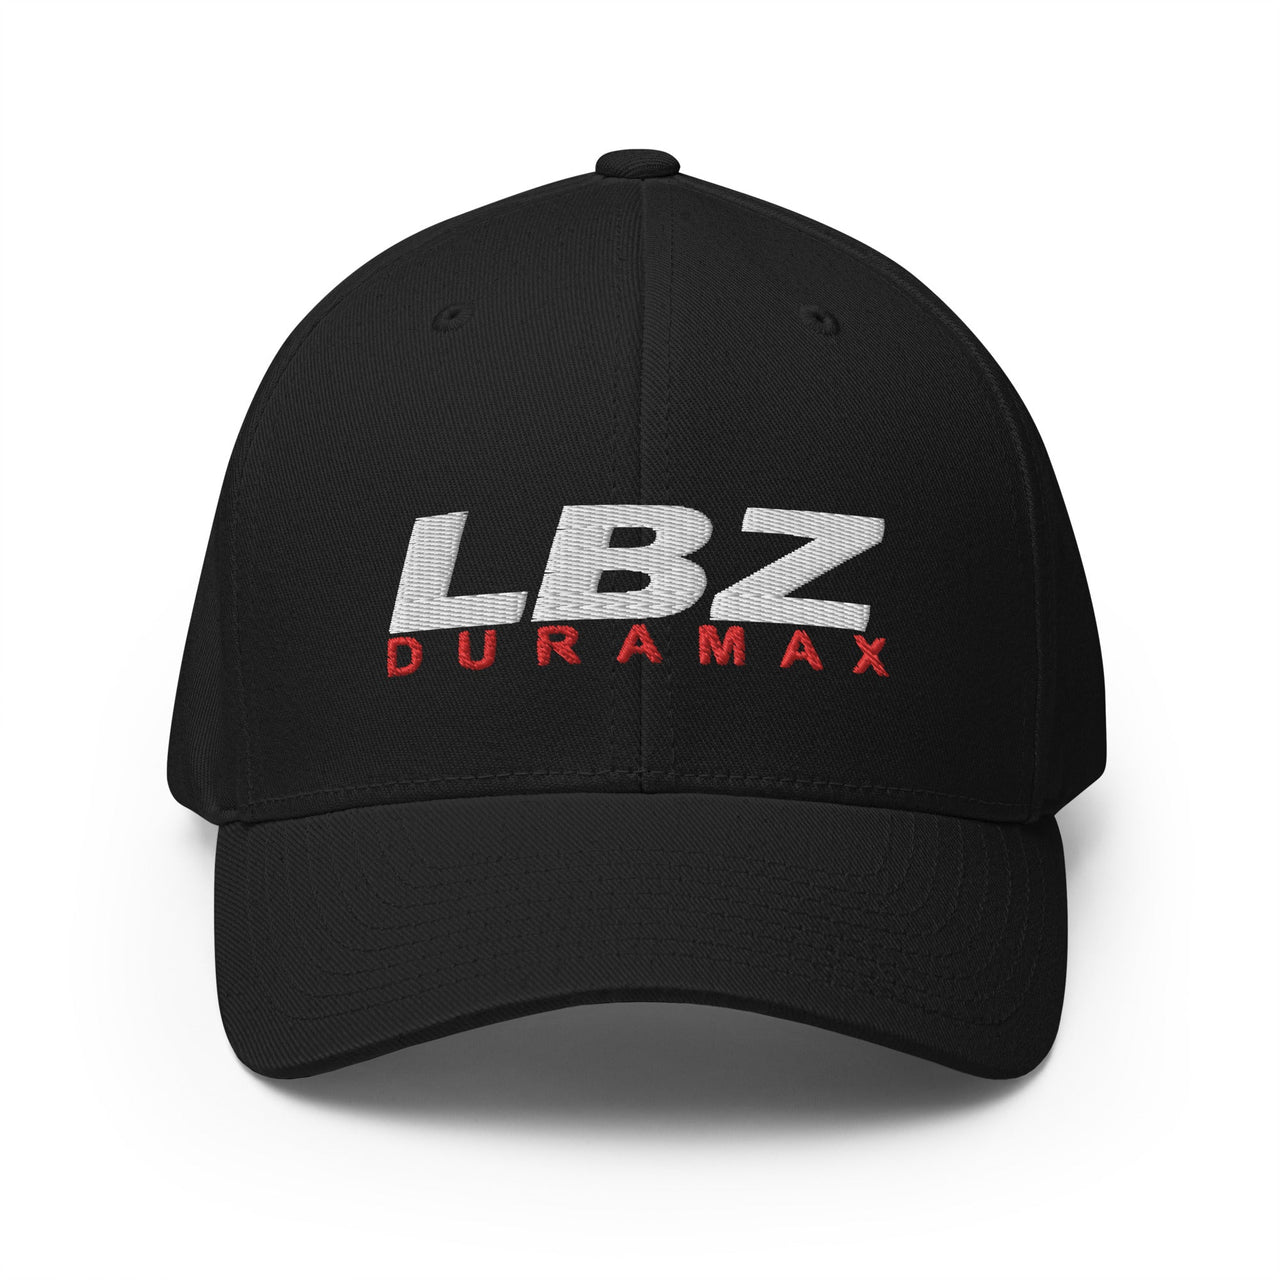 LBZ Duramax Hat Flexfit Basesball Cap